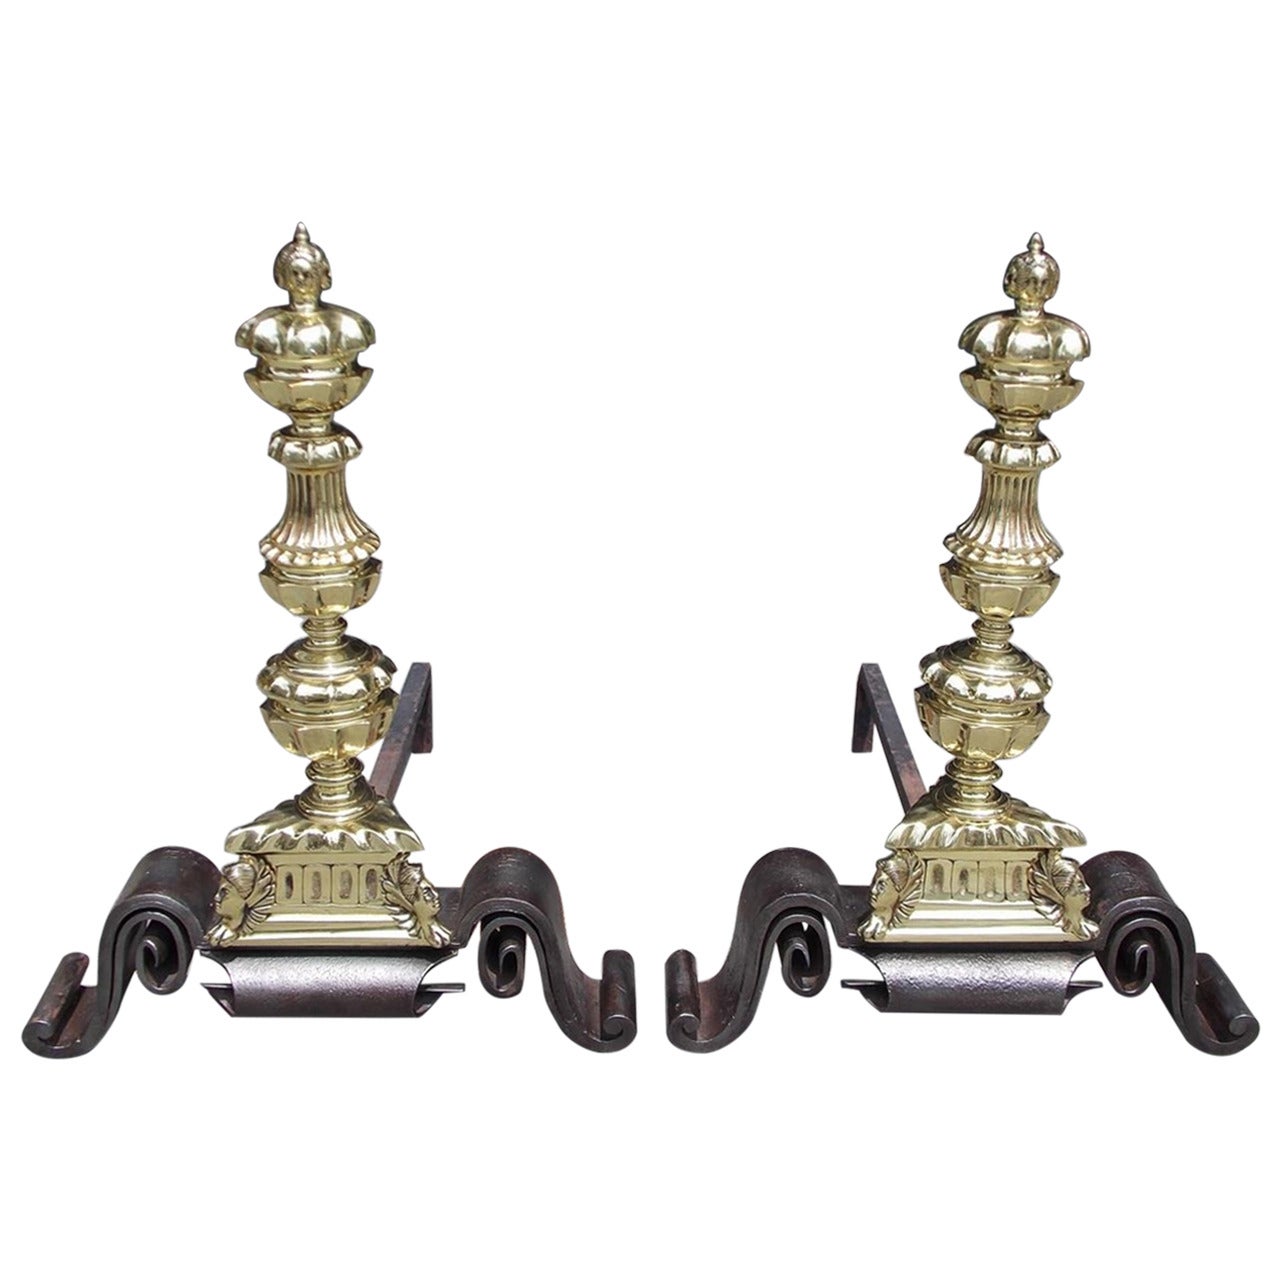 Pair of English Decorative Brass and Wrought Iron Andirons, Circa 1750